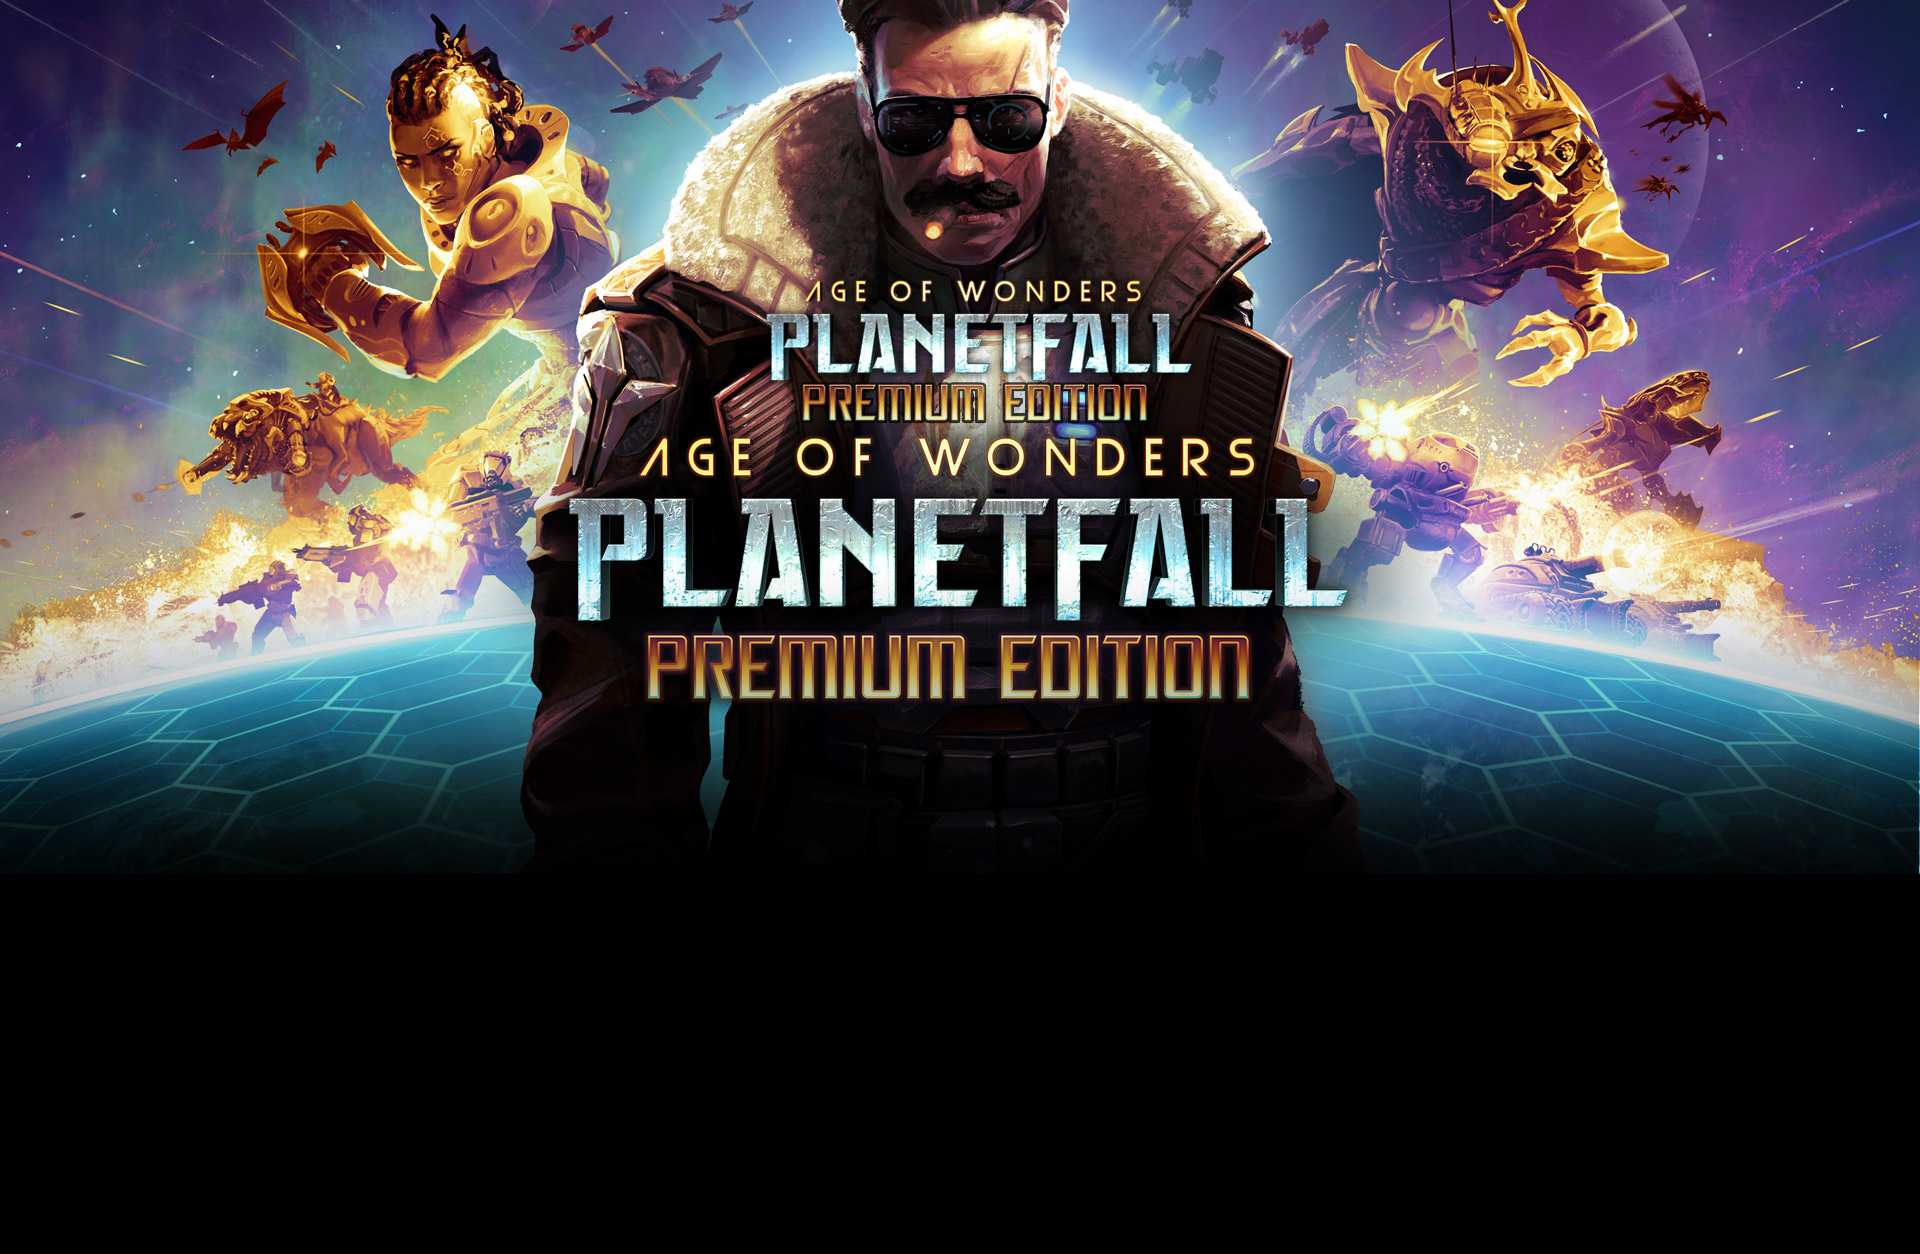 age of wonders: planetfall - premium edition gogage of wonders: planetfall - premium edition gog